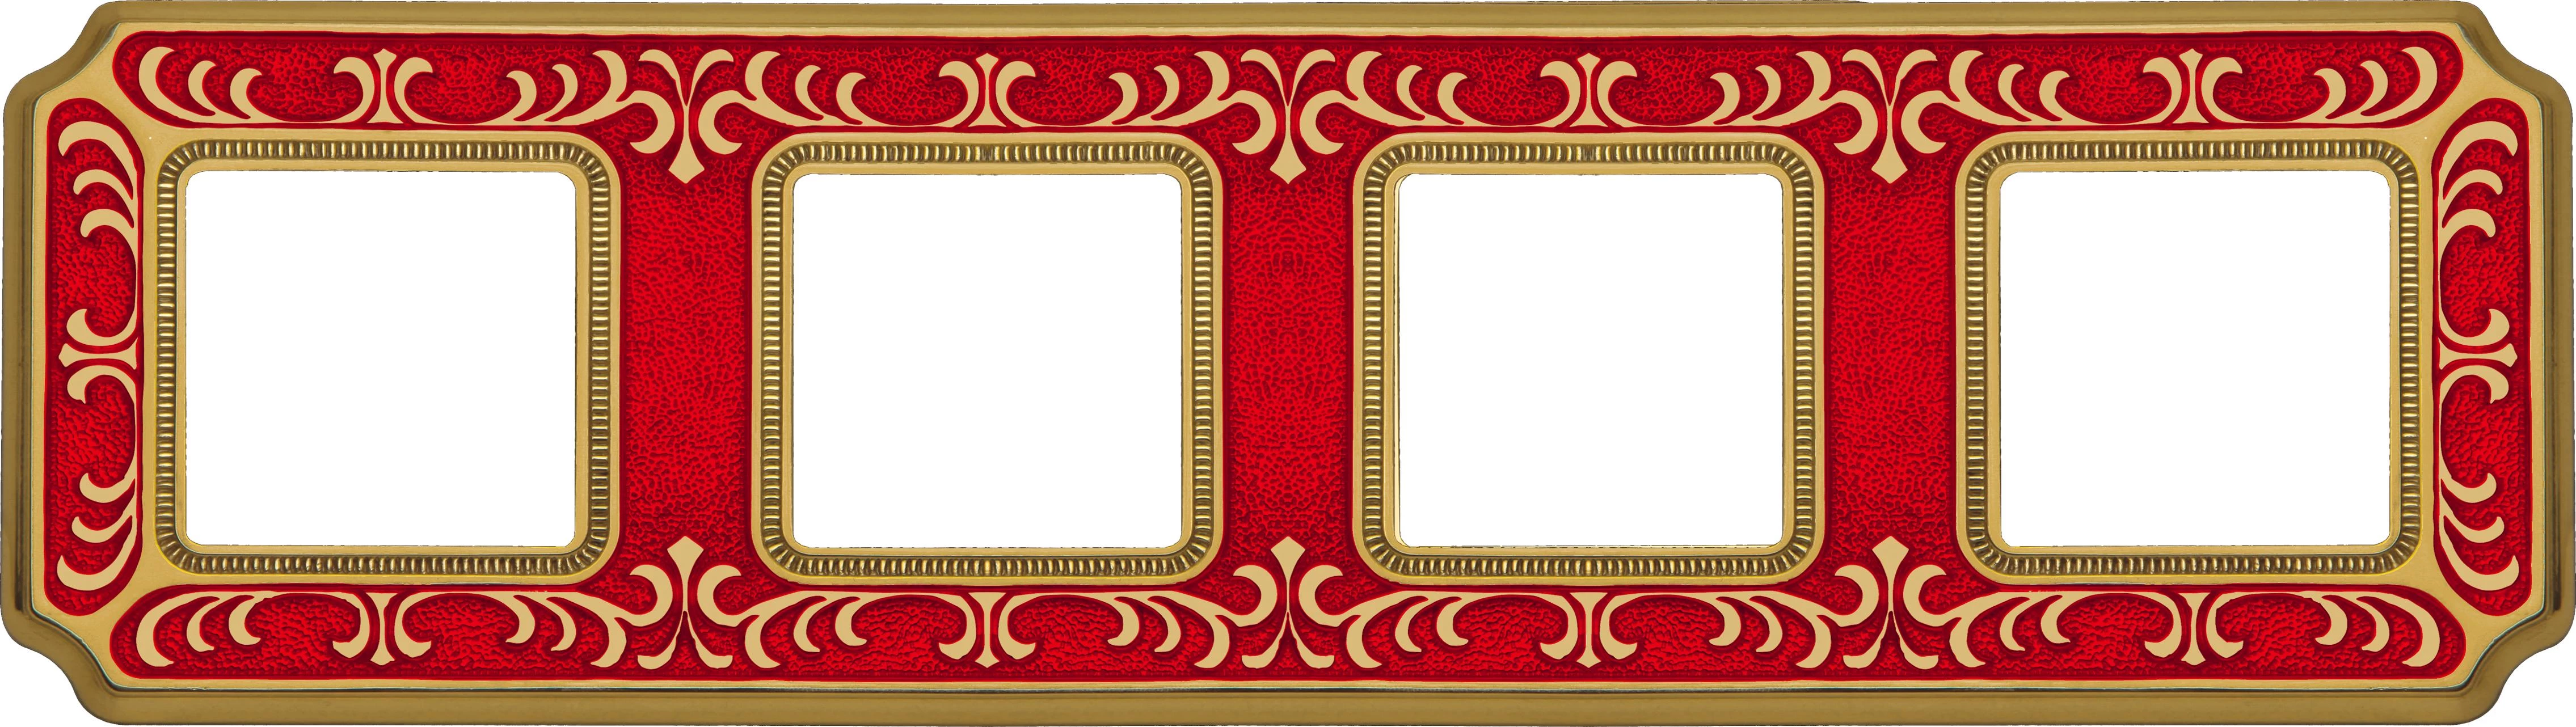  артикул FD01354ROEN название Рамка четверная, цвет Рубиново-красный, Siena, Fede